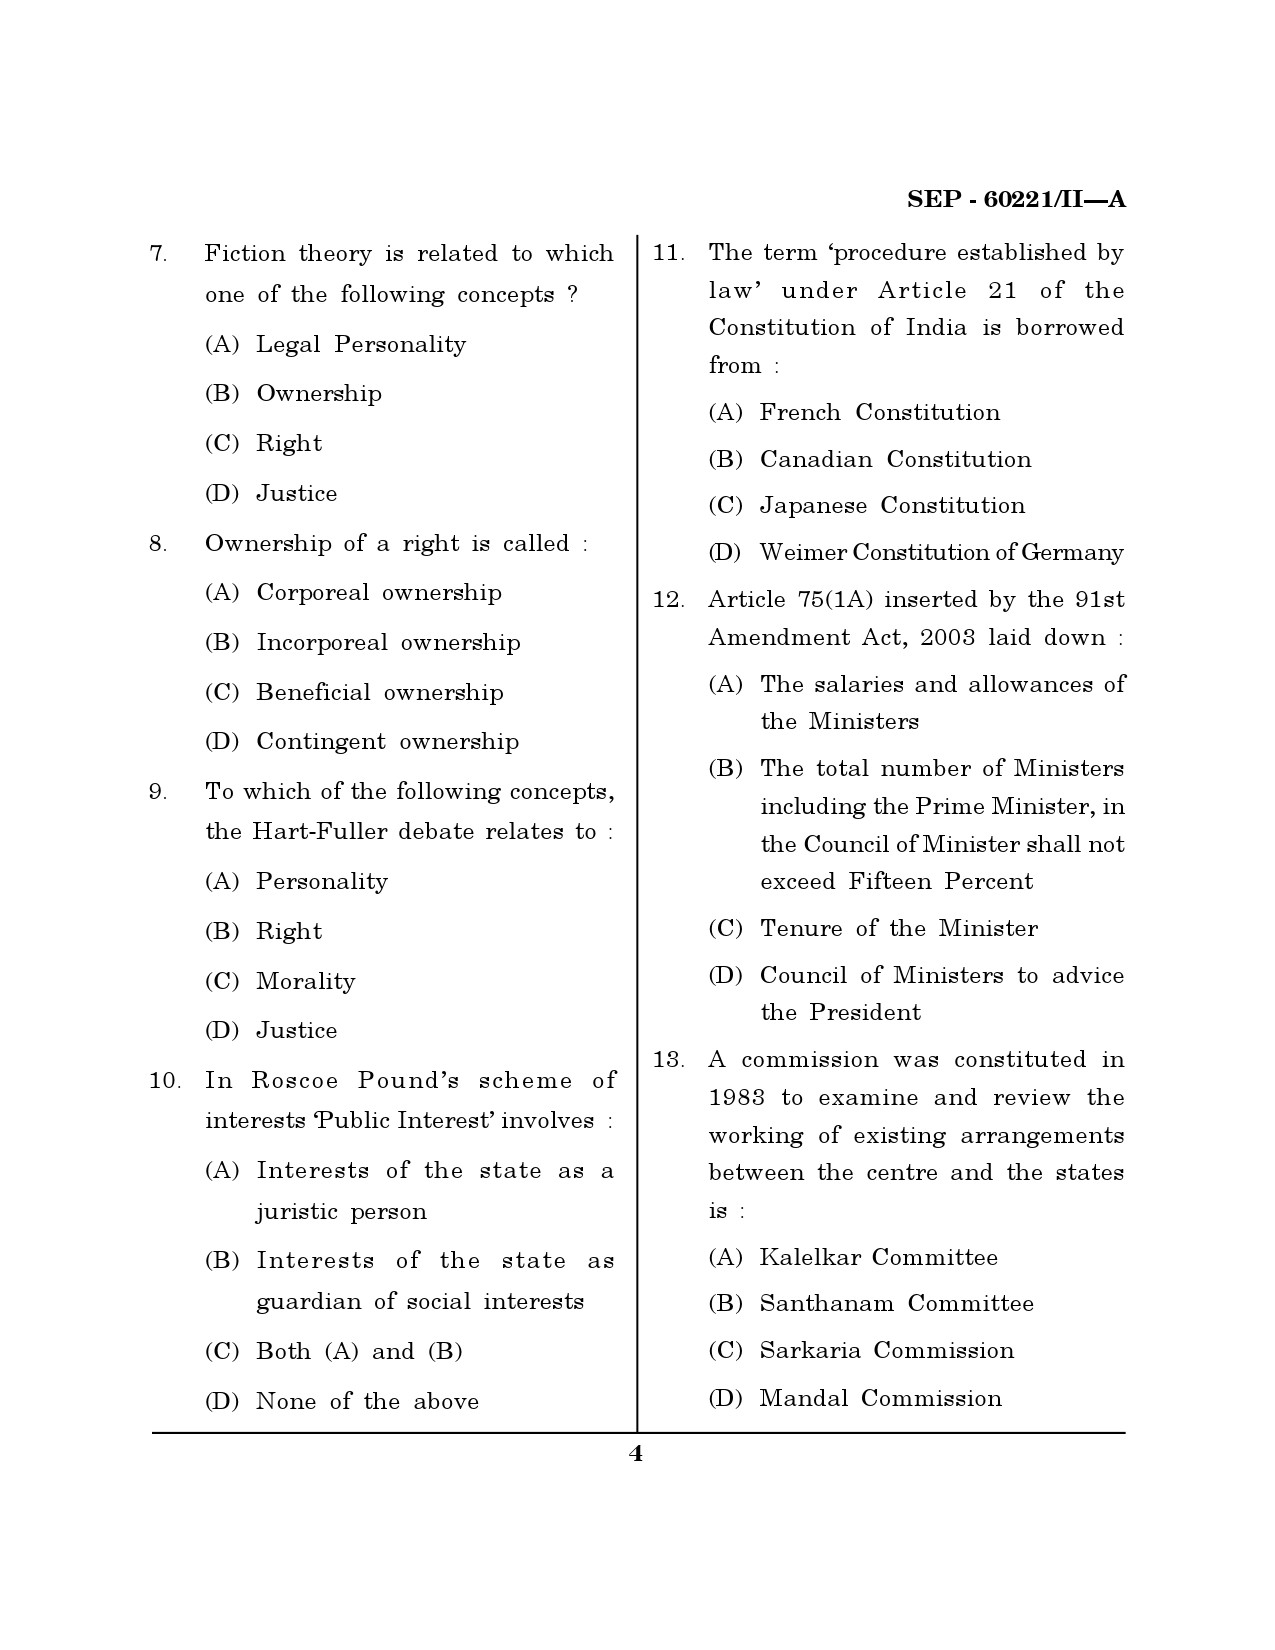 Maharashtra SET Law Exam Question Paper September 2021 3